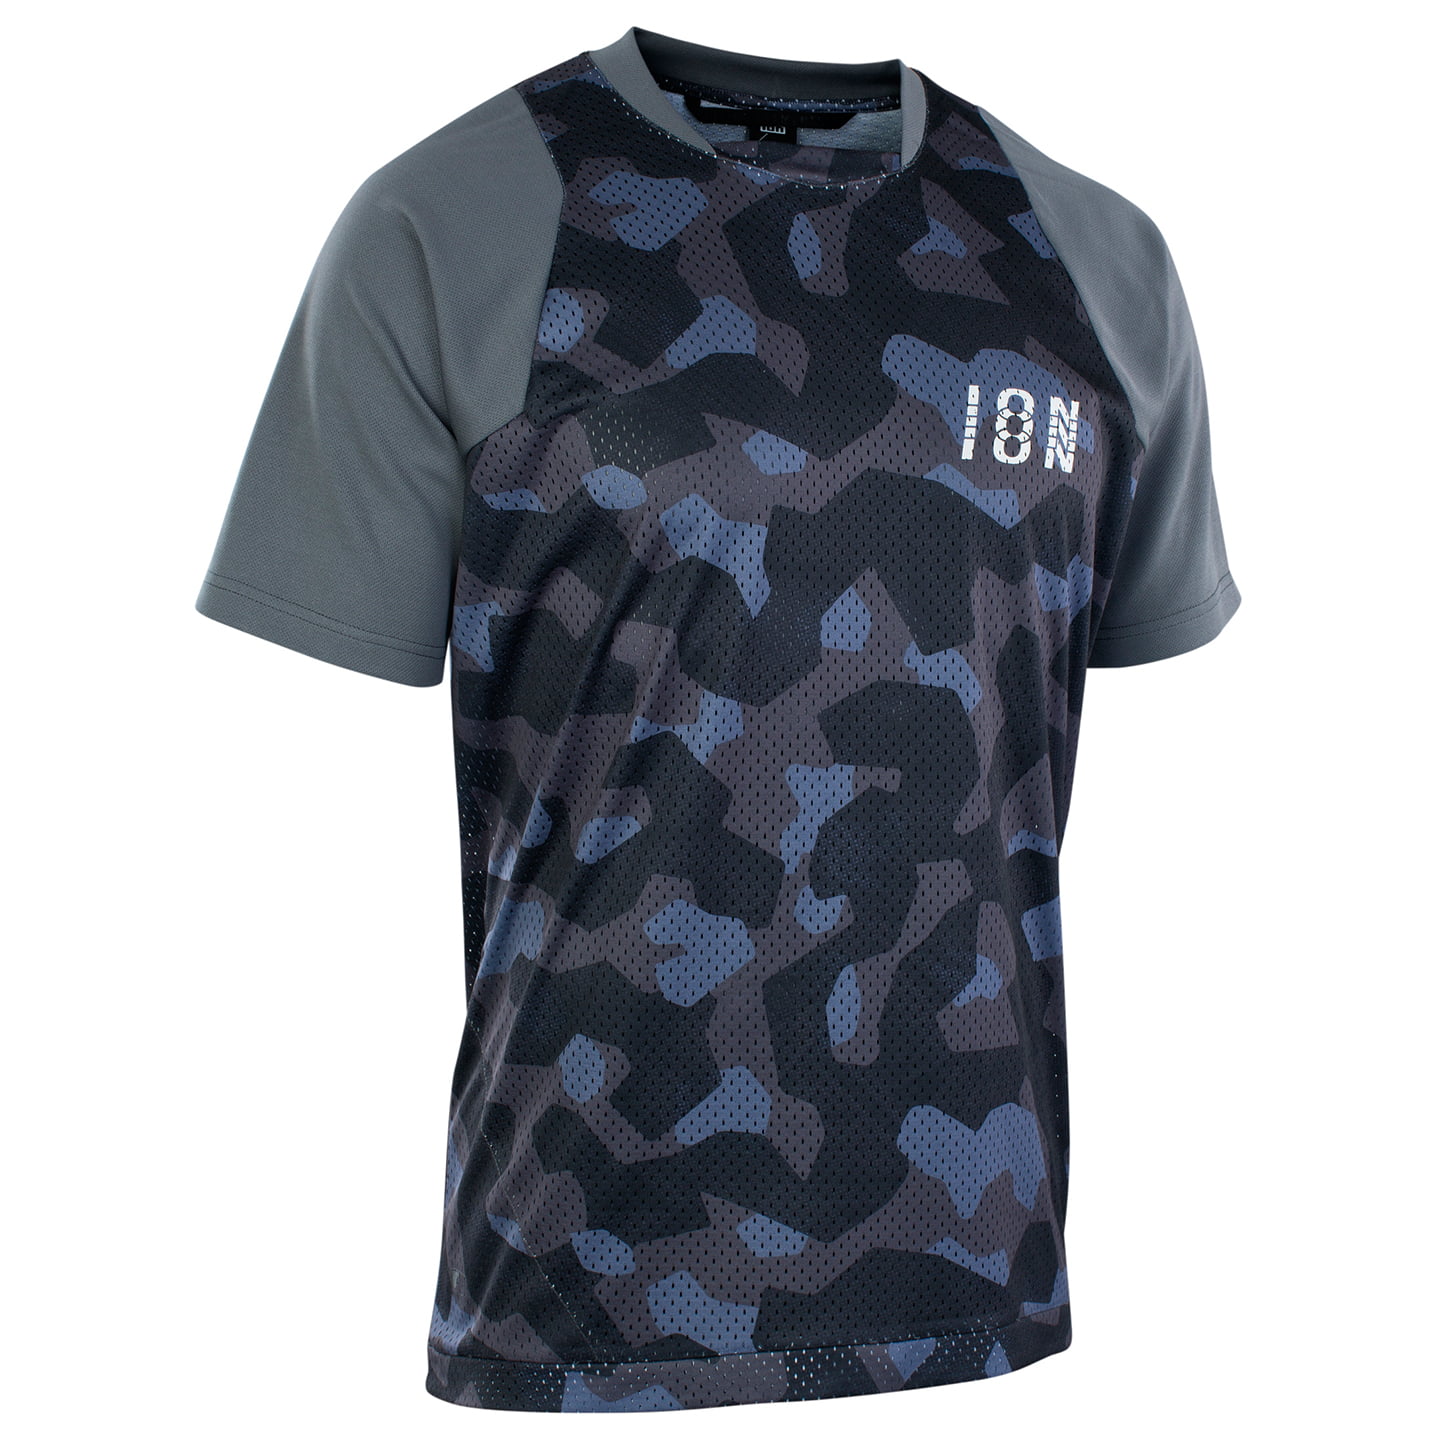 ION Scrub Bike Shirt, for men, size XL, Cycling jersey, Cycle clothing